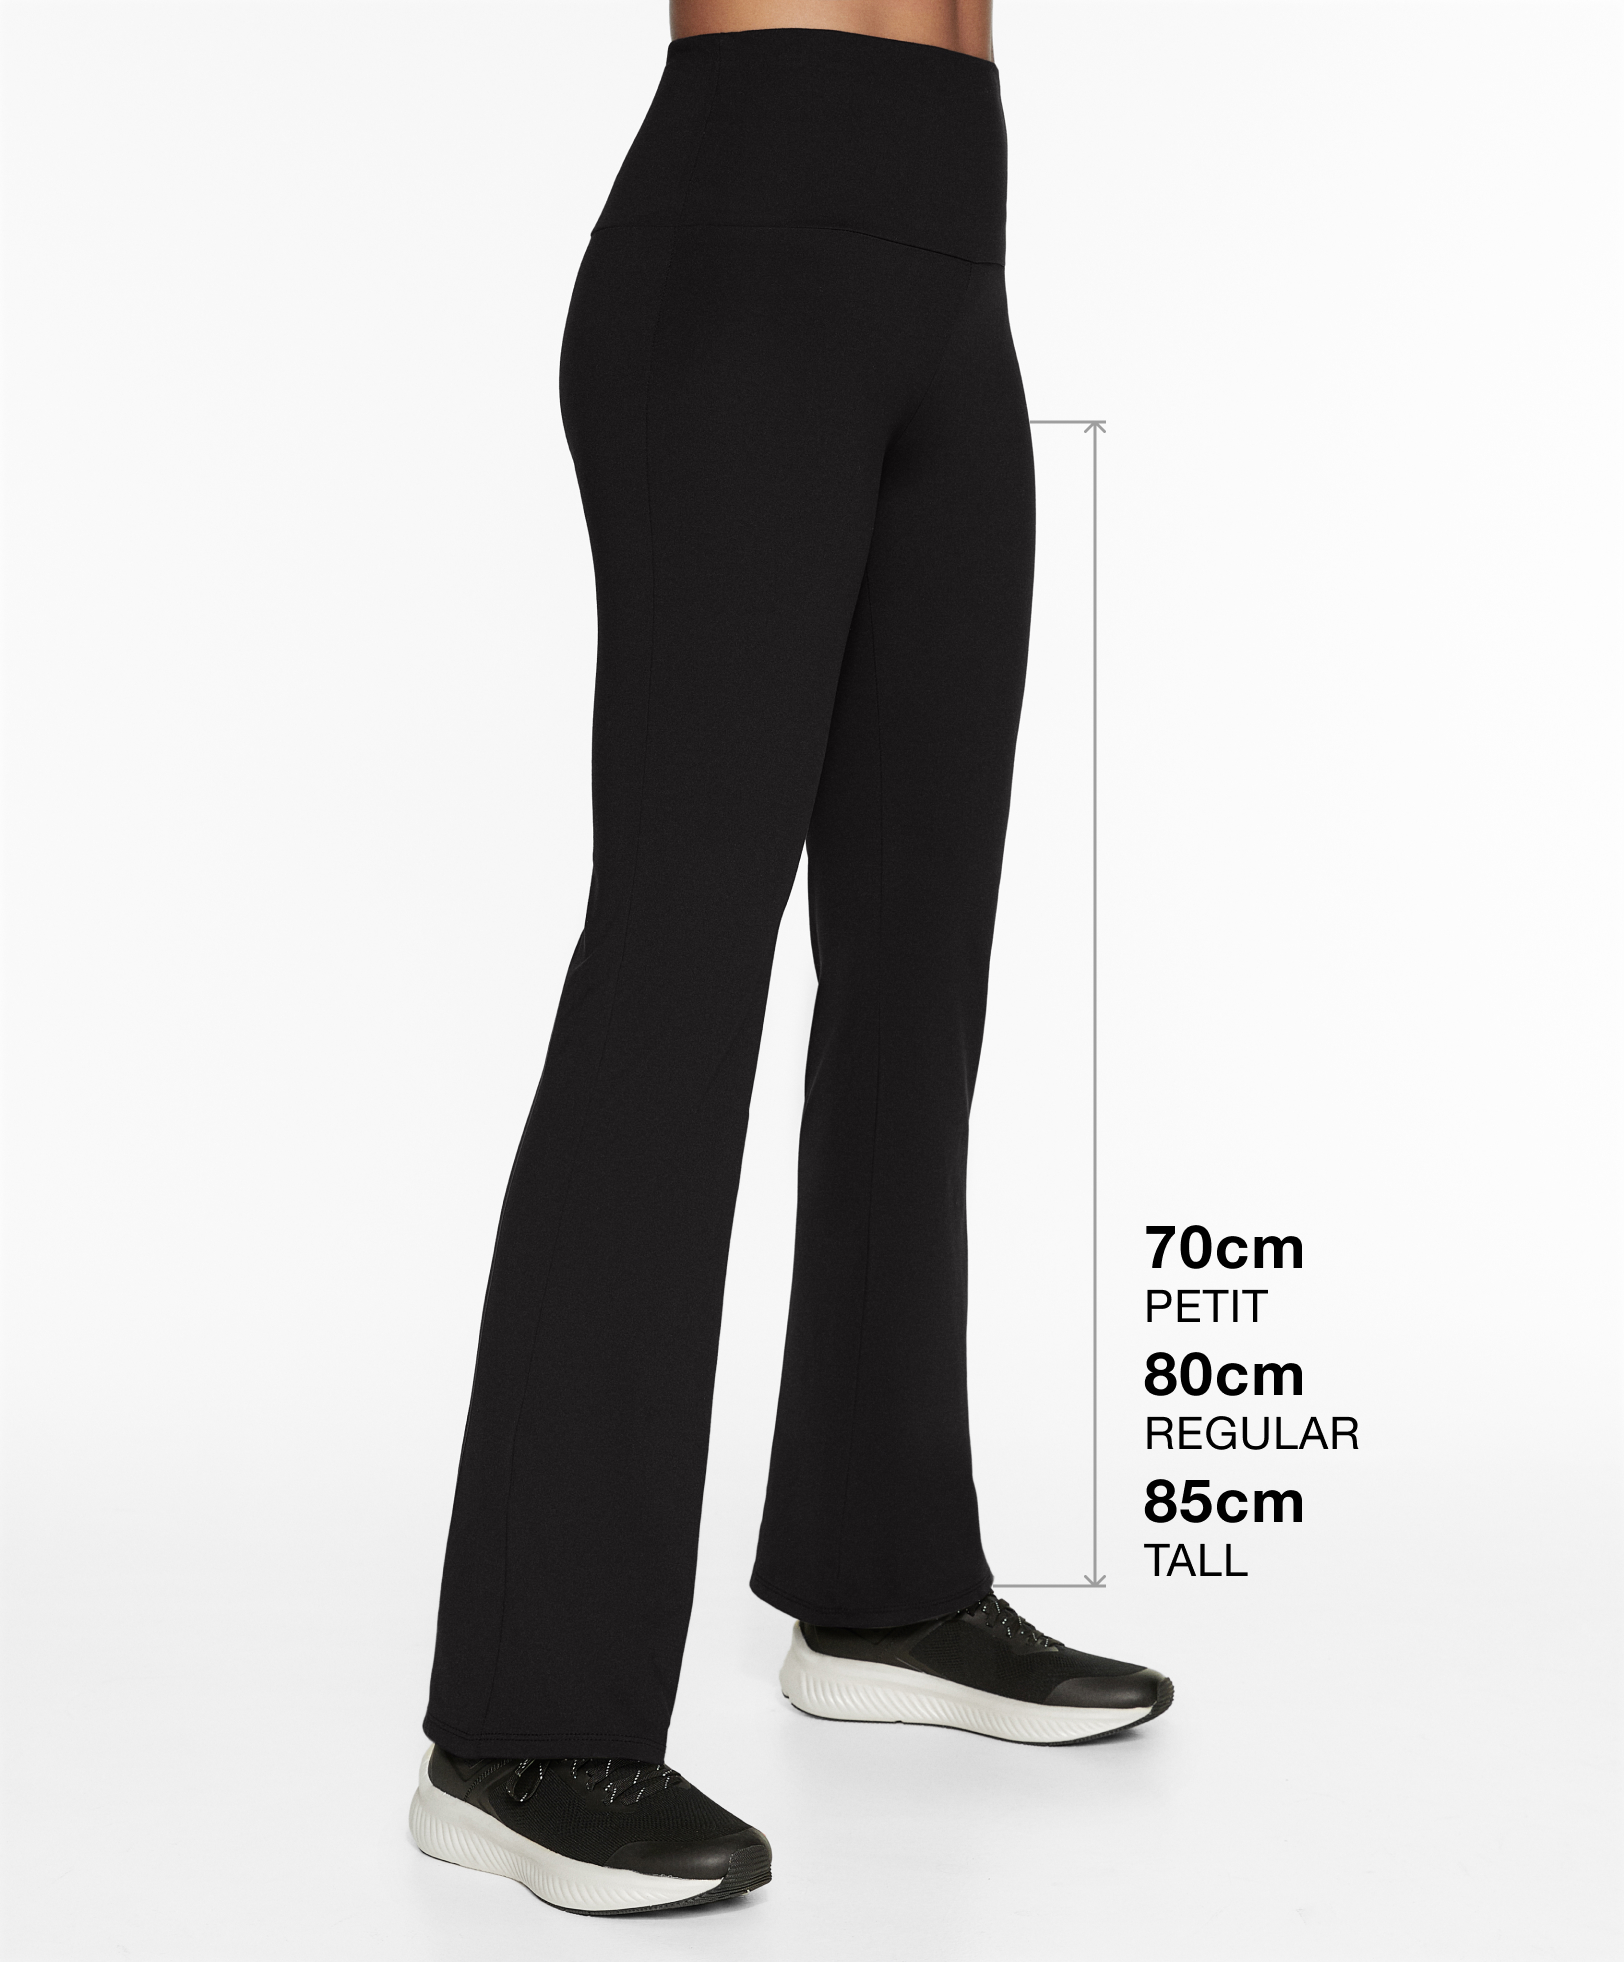 Mesh compressive core control 65 cm ankle-length leggings